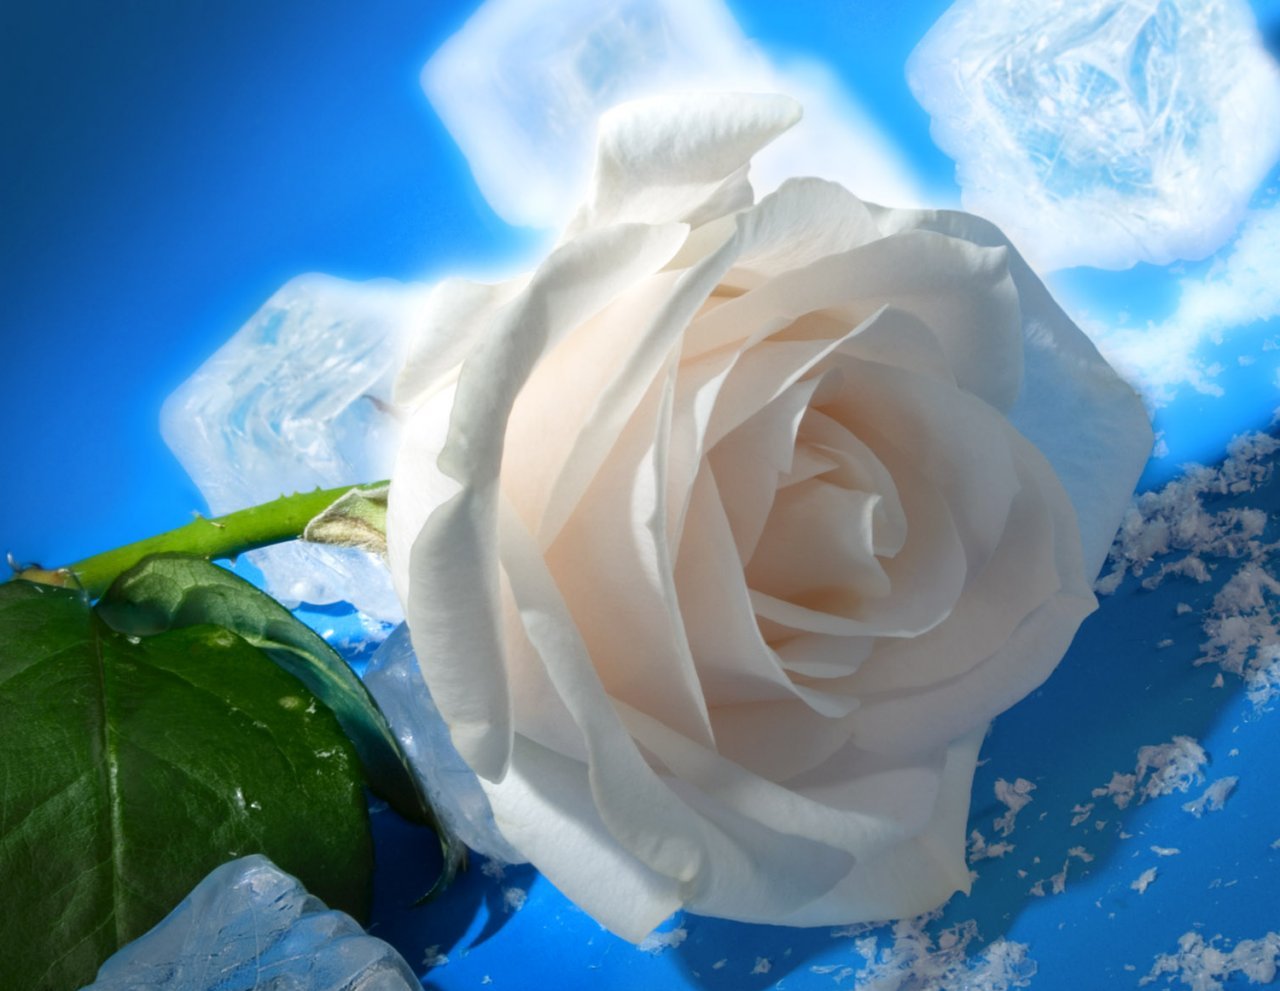 rose flower wallpaper hd descarga gratuita,rosa,flor,blanco,pétalo,rosas de jardín